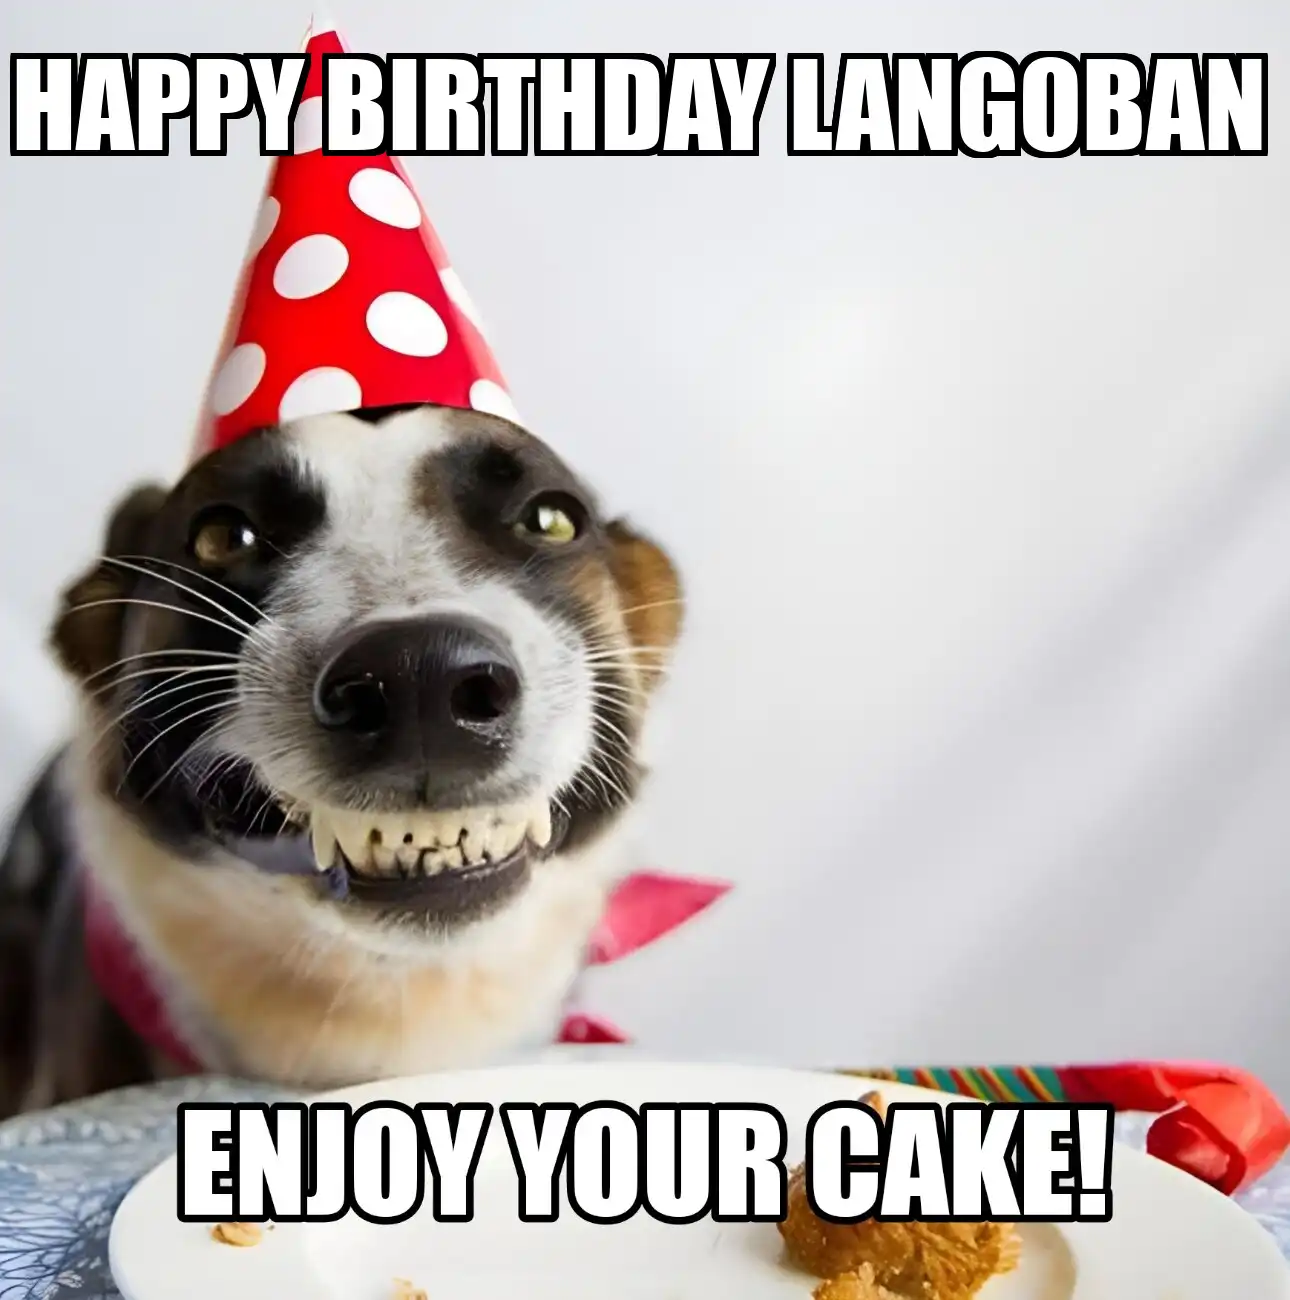 Happy Birthday Langoban Enjoy Your Cake Dog Meme